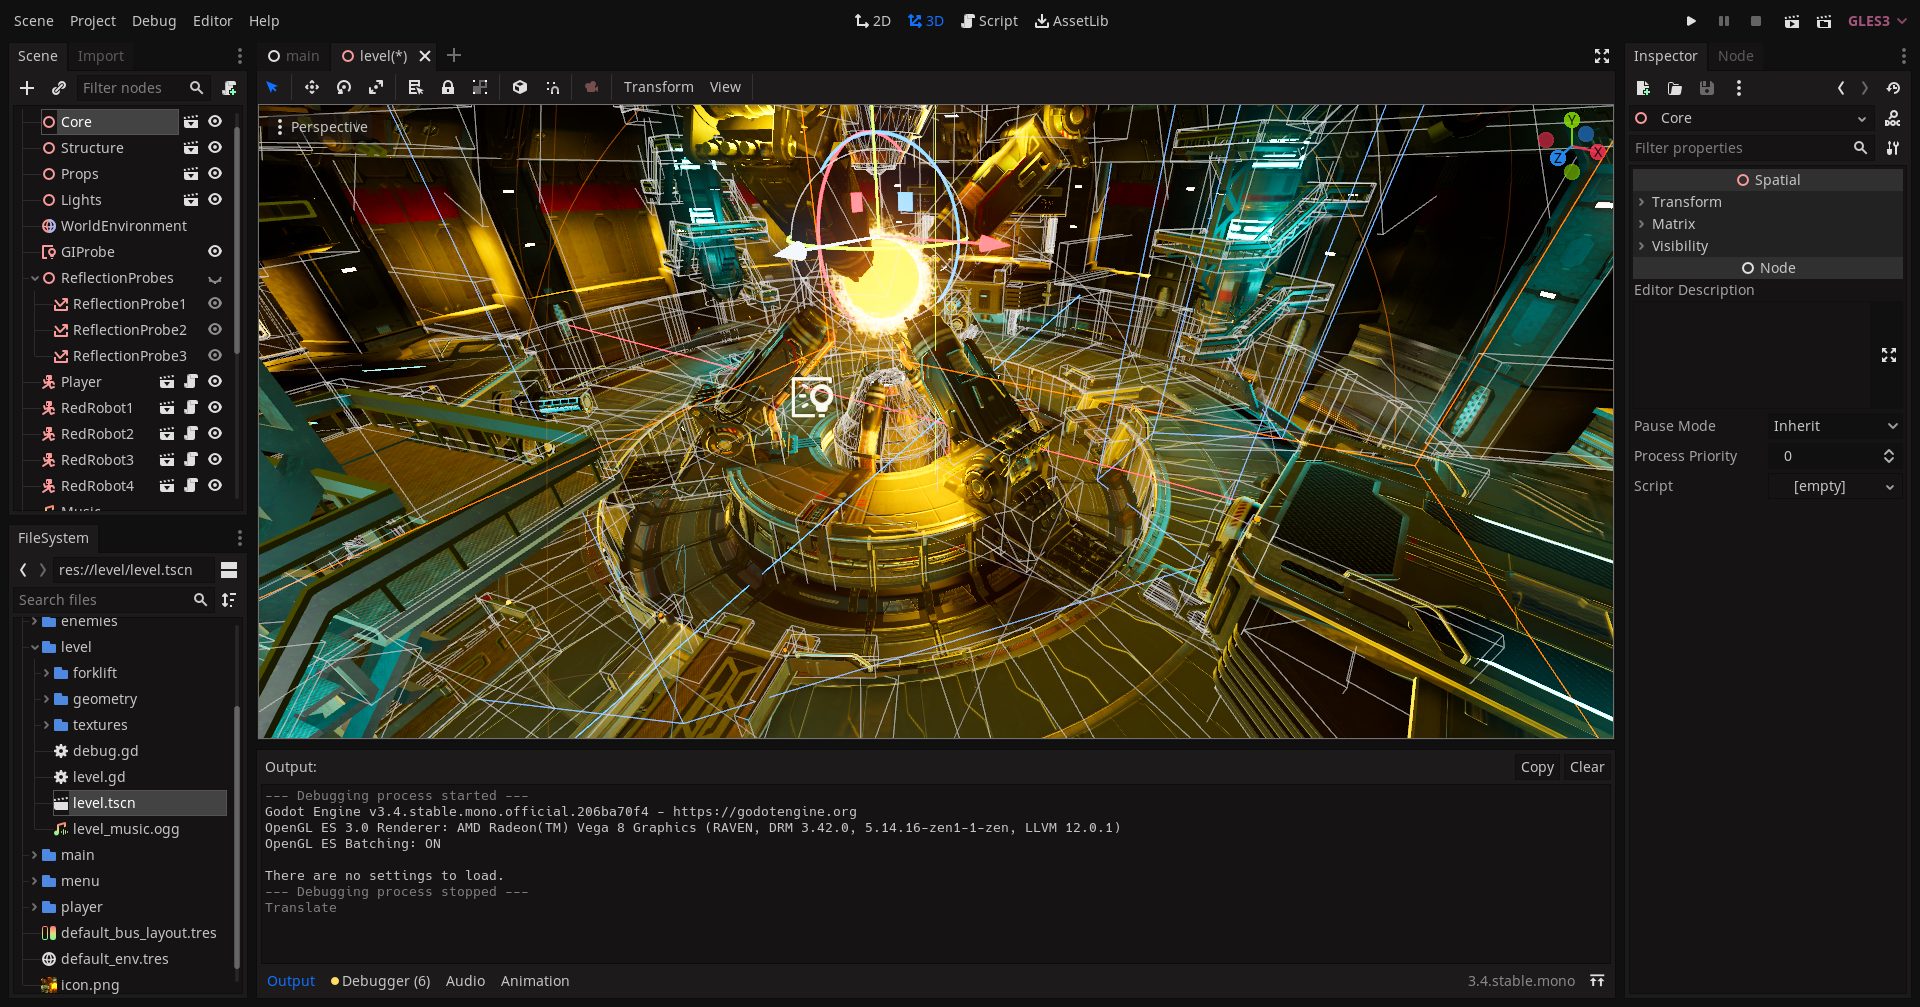 Screenshot from godot game engine